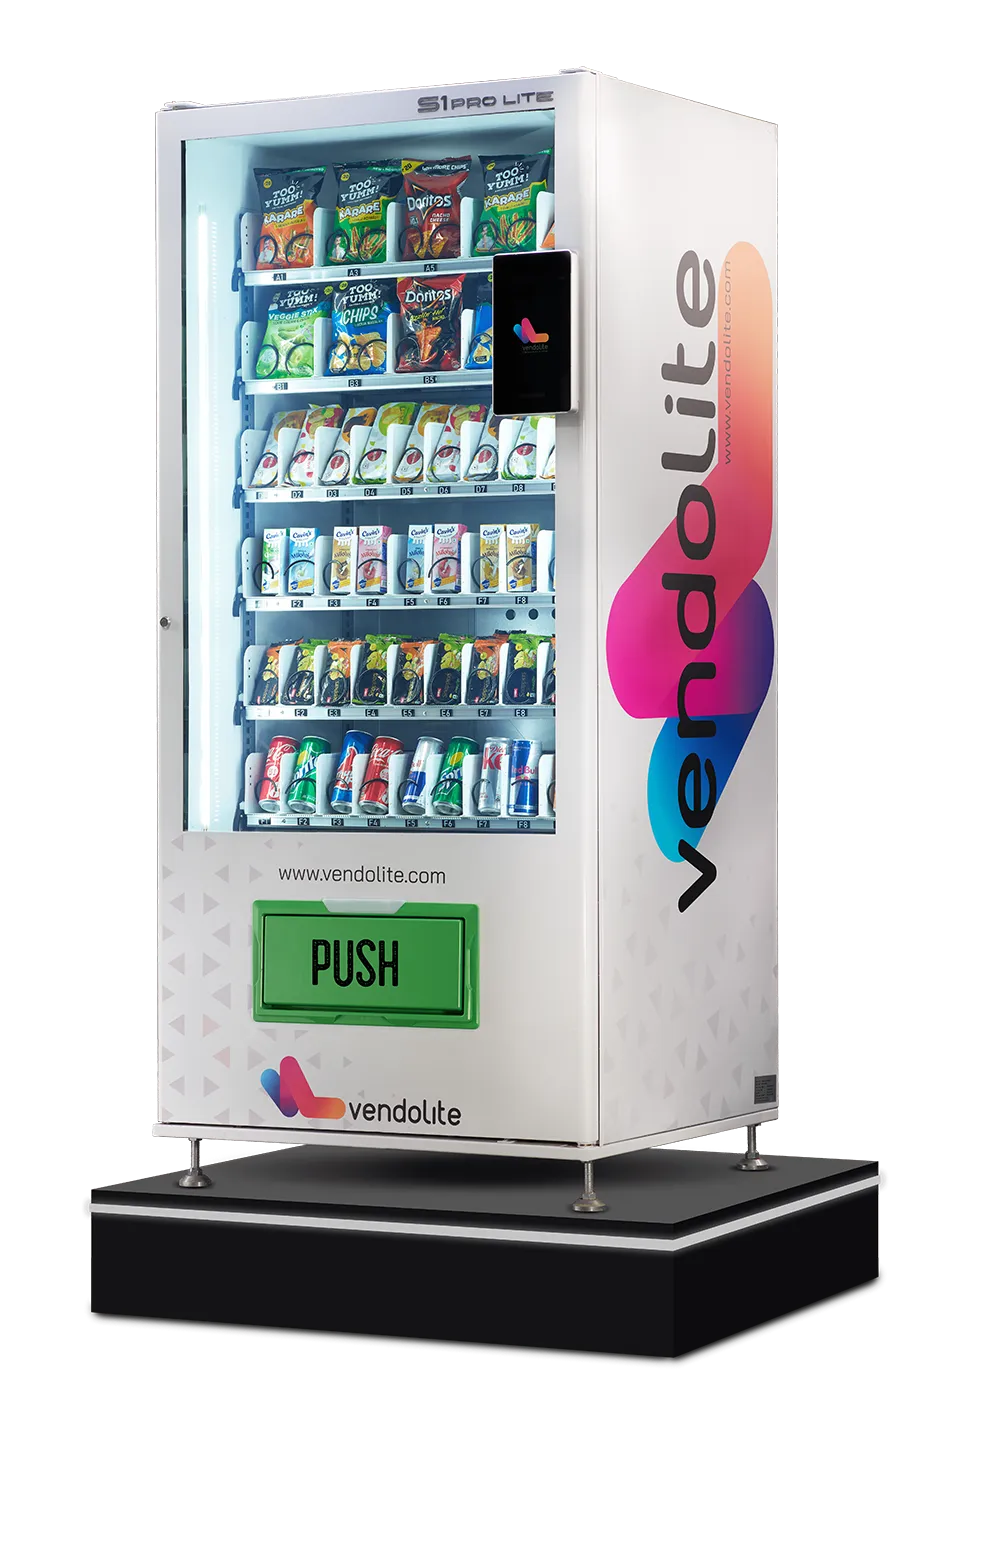 S1 Pro Lite Vending Machine